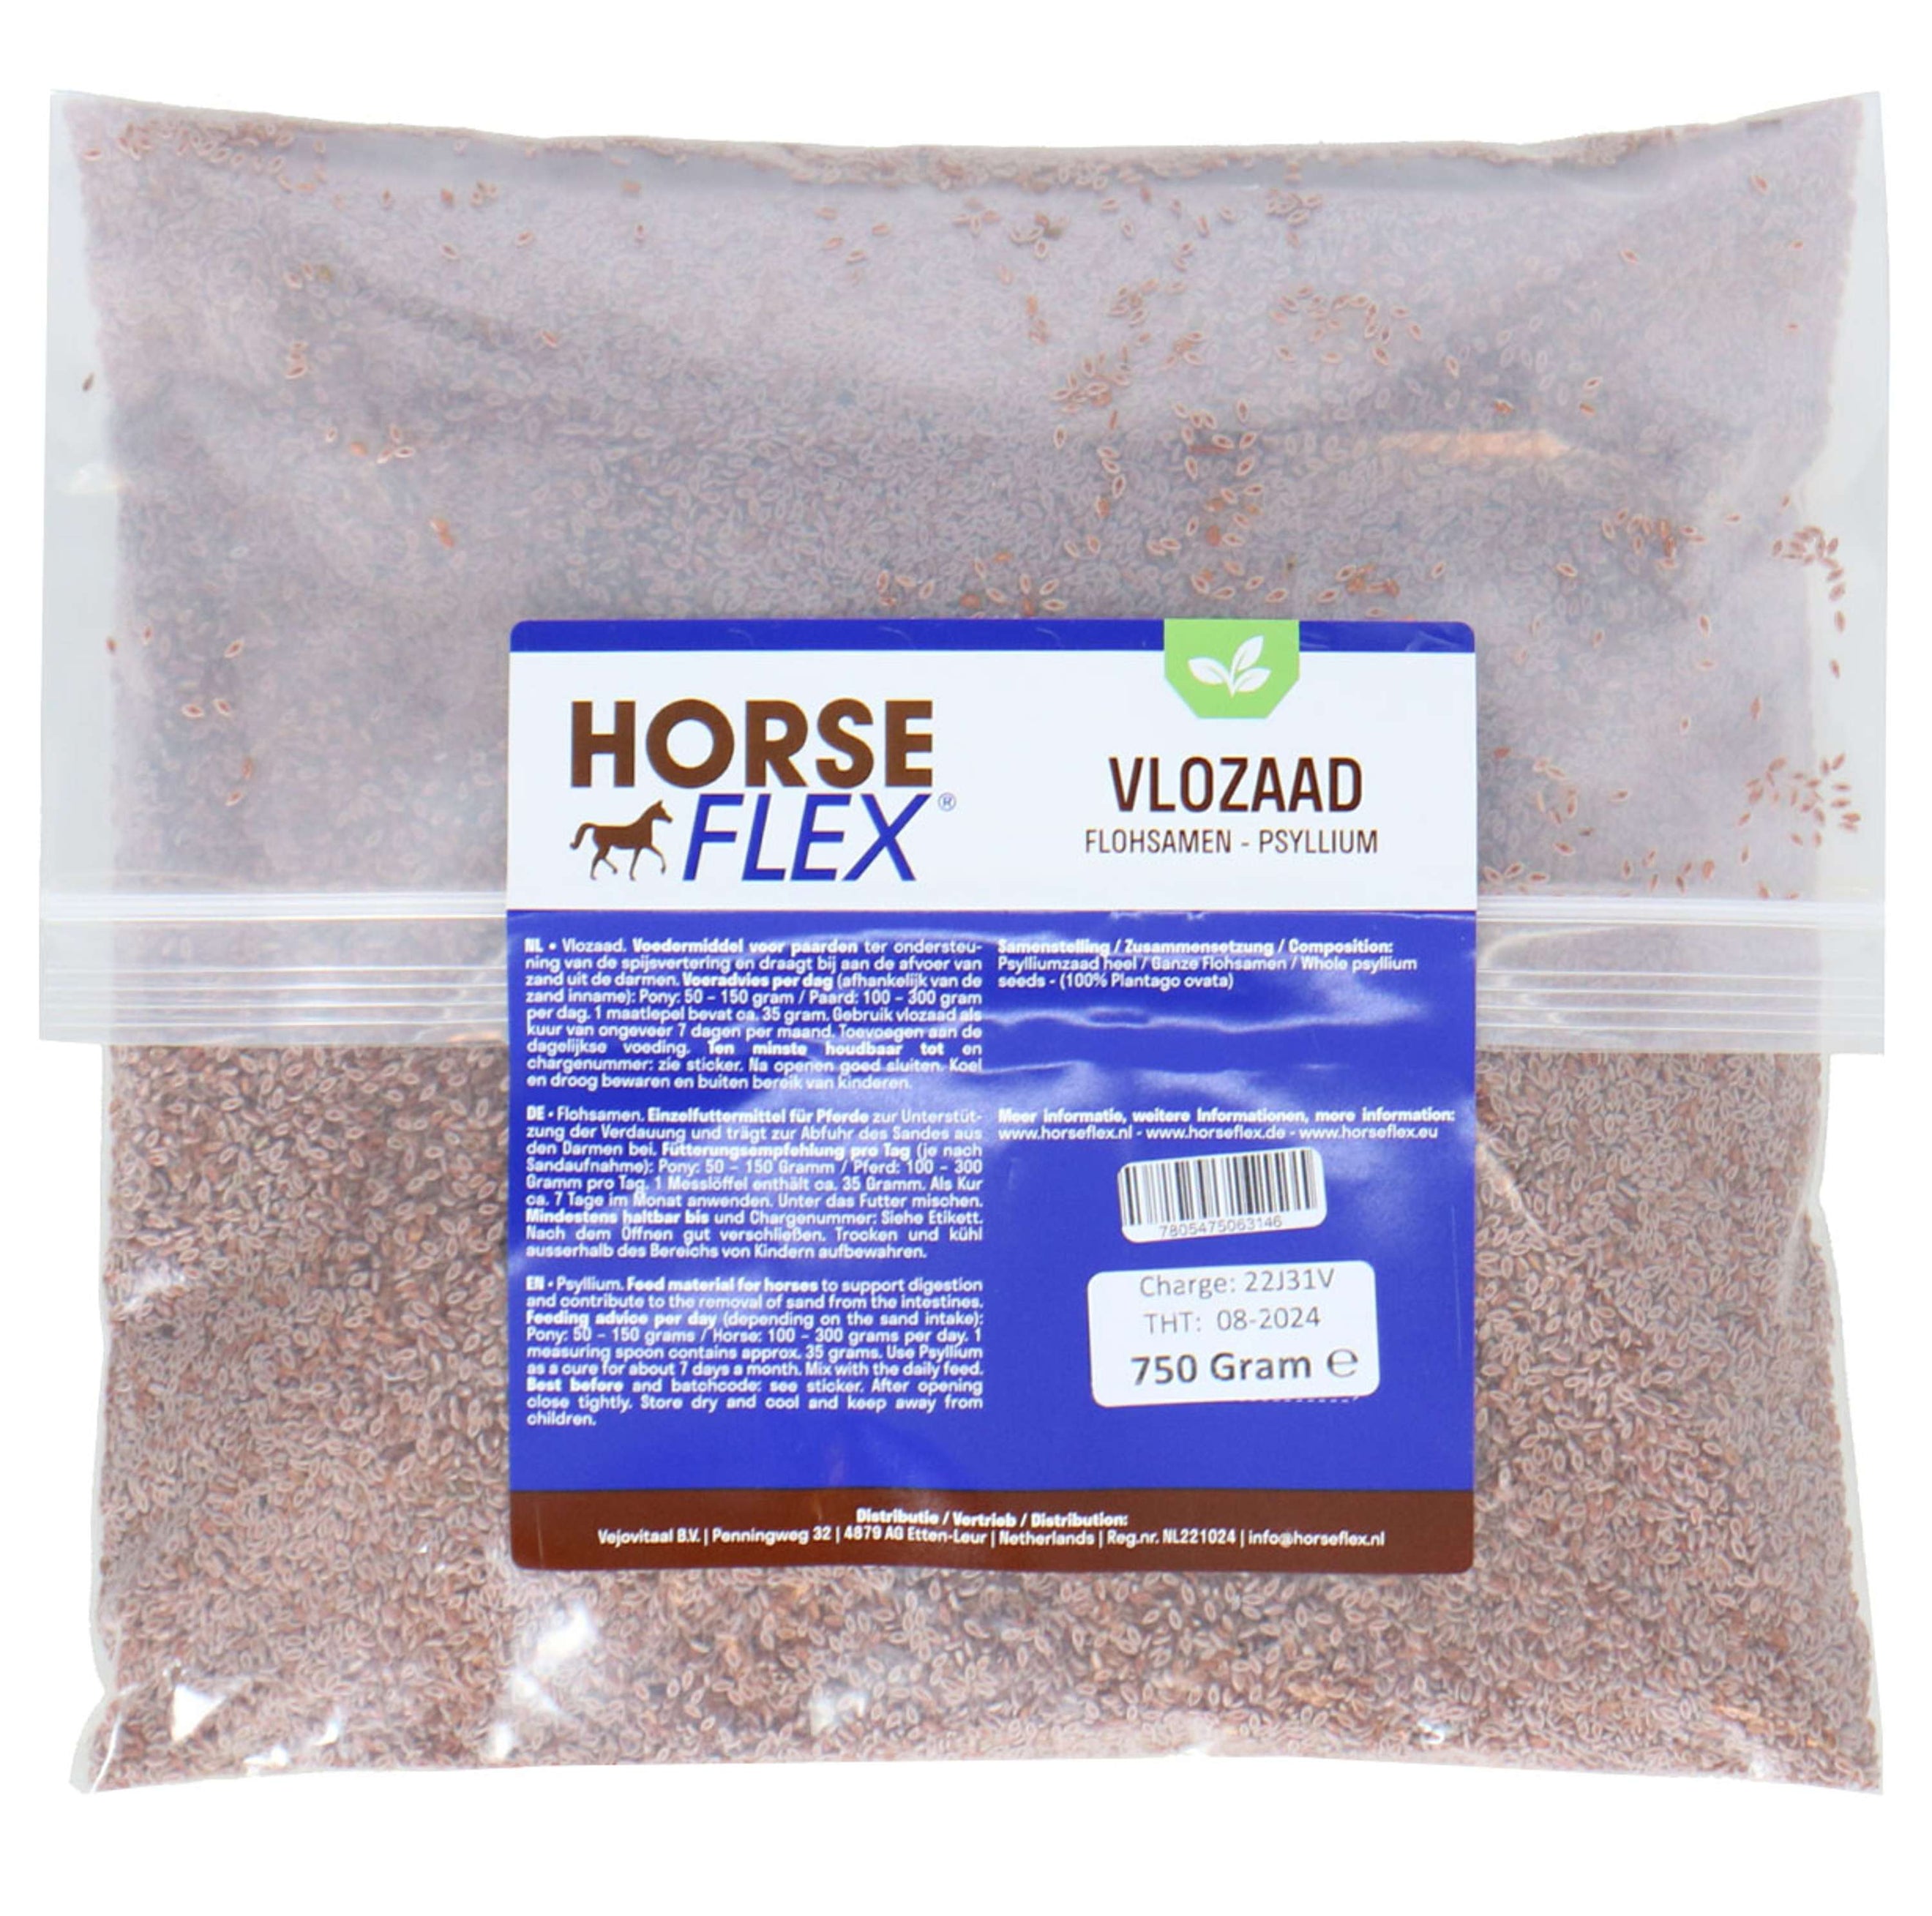 HorseFlex Plantain Recharge